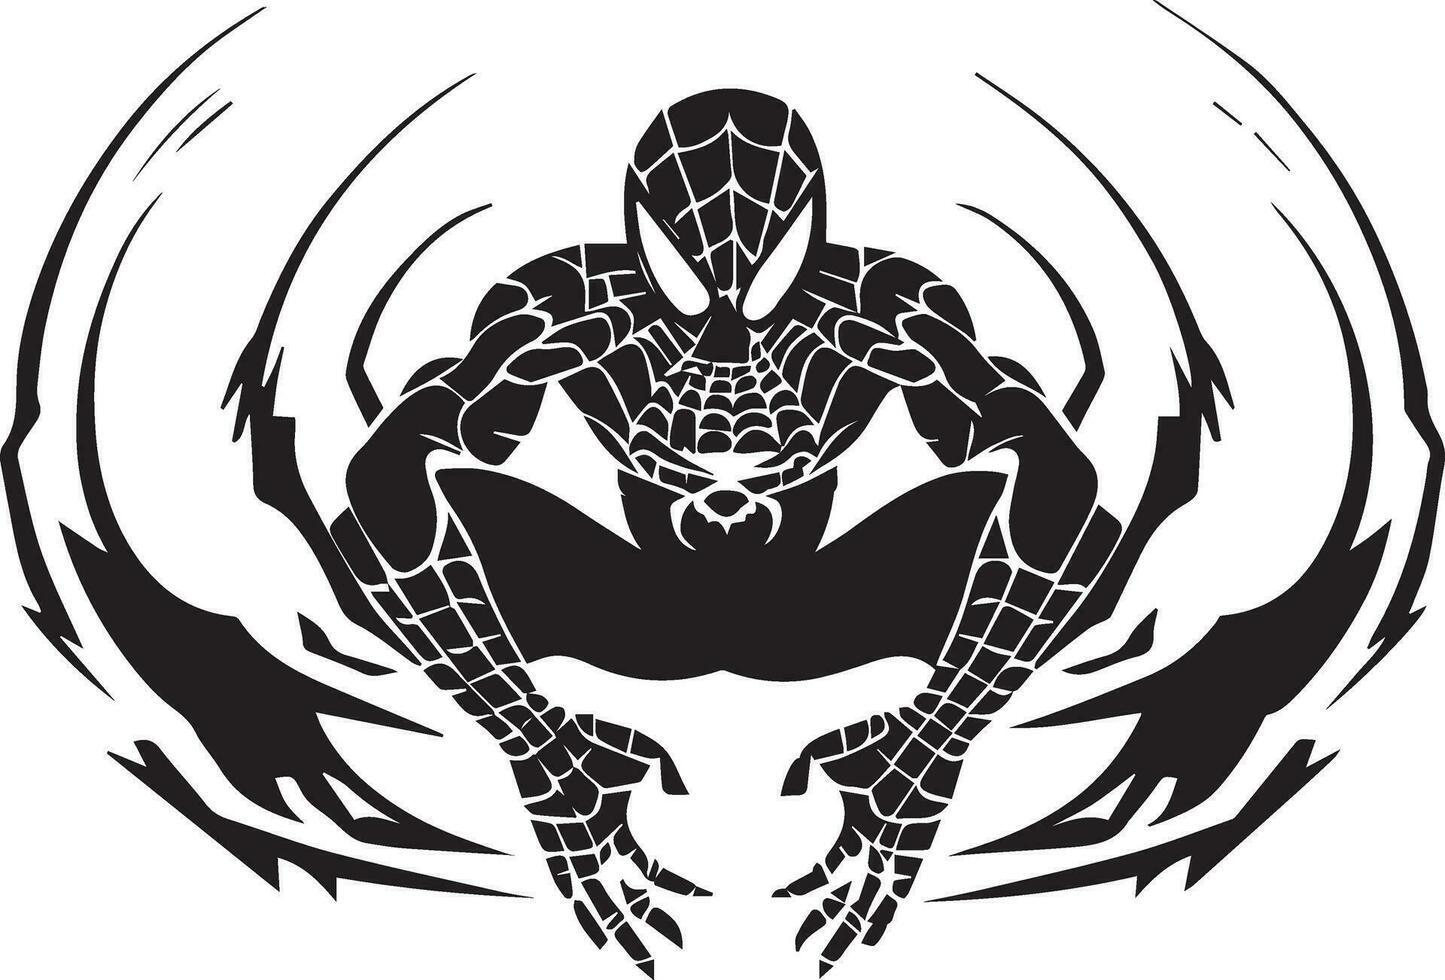 Spiderman tattoo design vector illustration